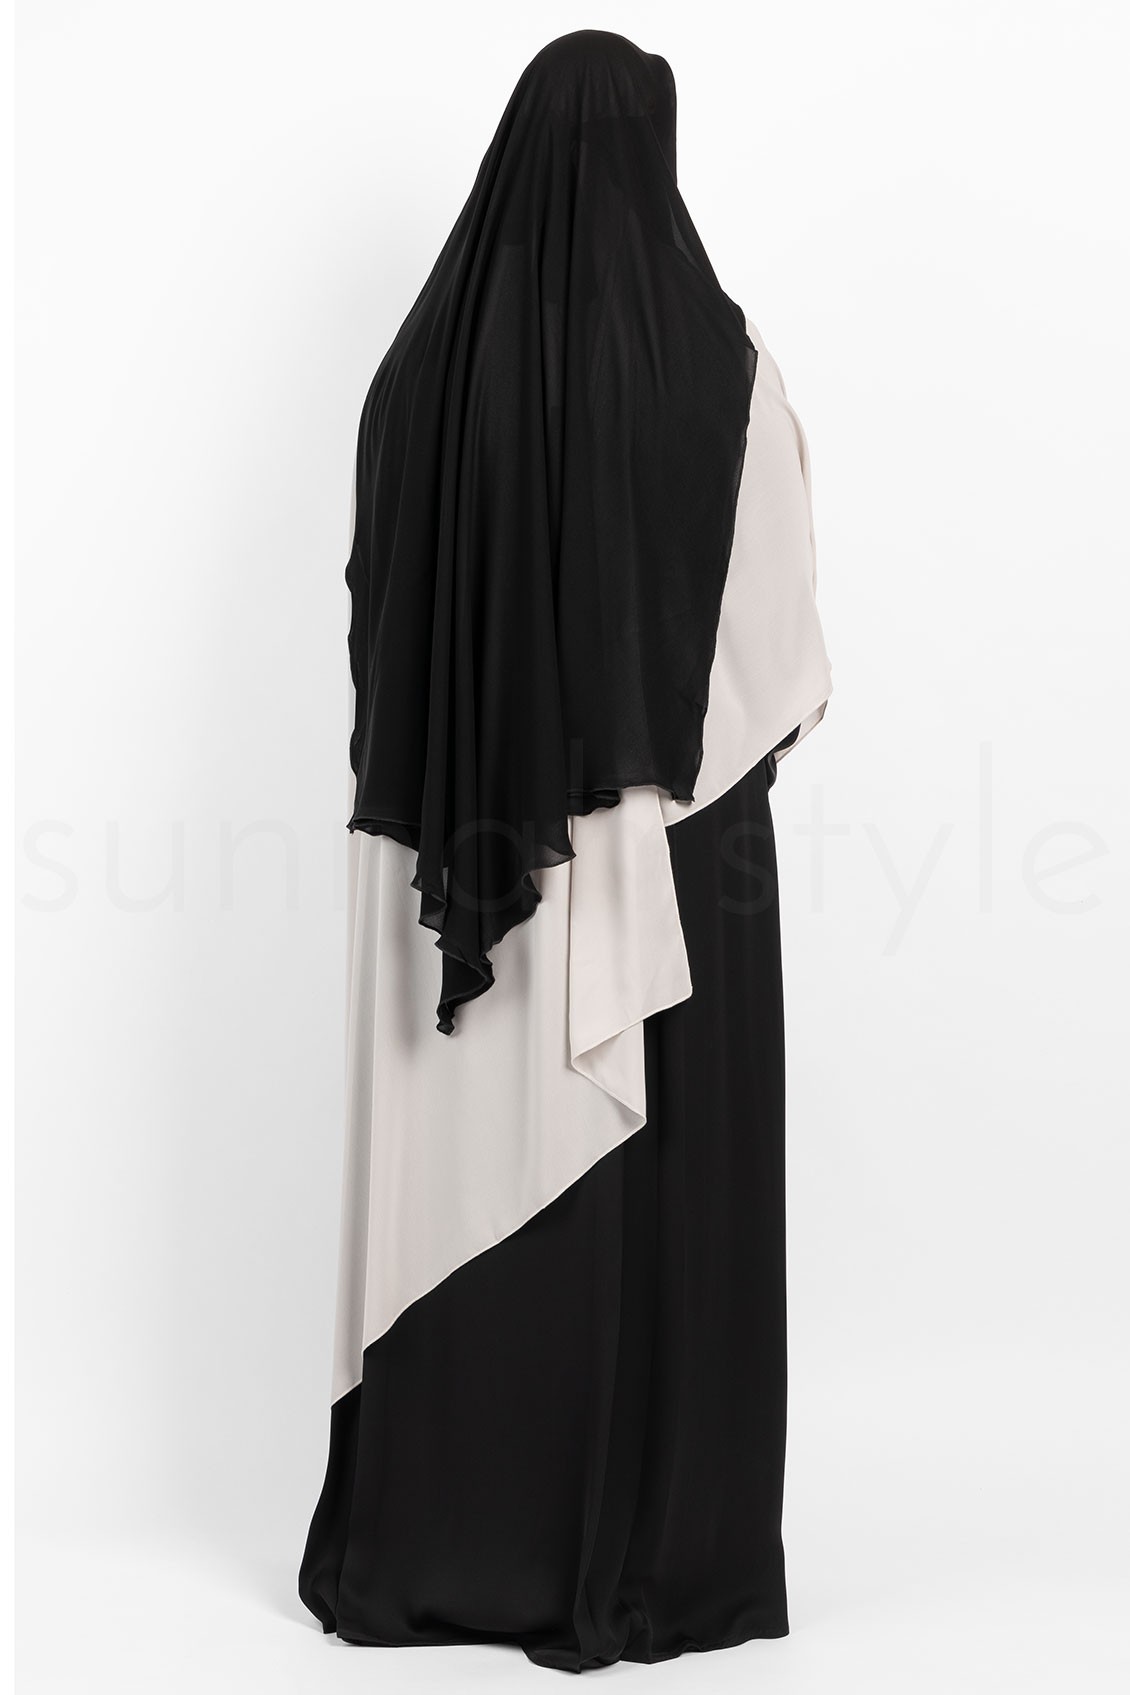 Sunnah Style Extra Long Diamond Niqab Black